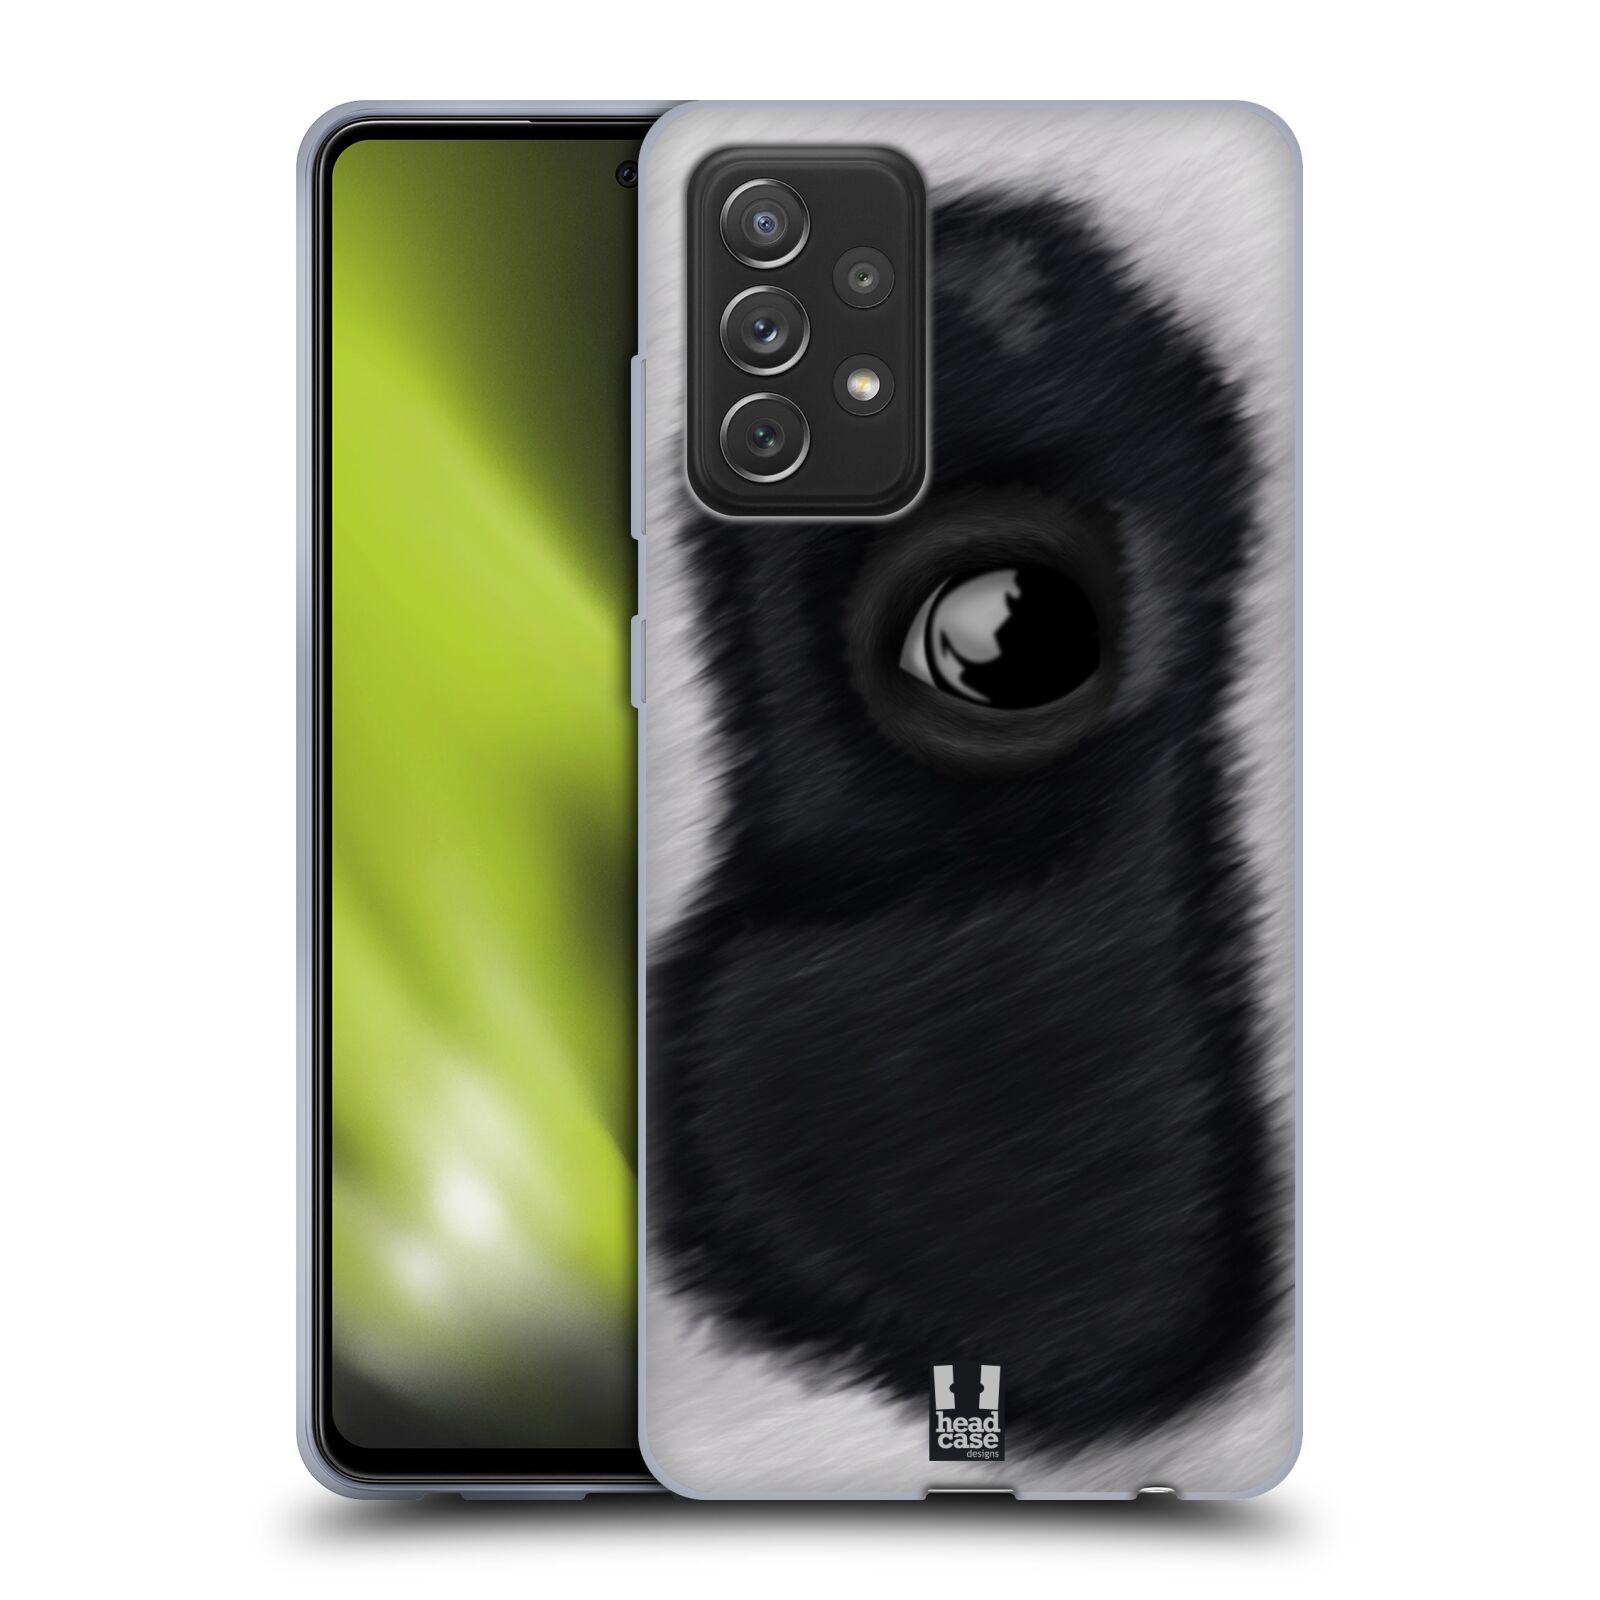 Plastový obal HEAD CASE na mobil Samsung Galaxy A72 / A72 5G vzor pohled zvířete oko panda